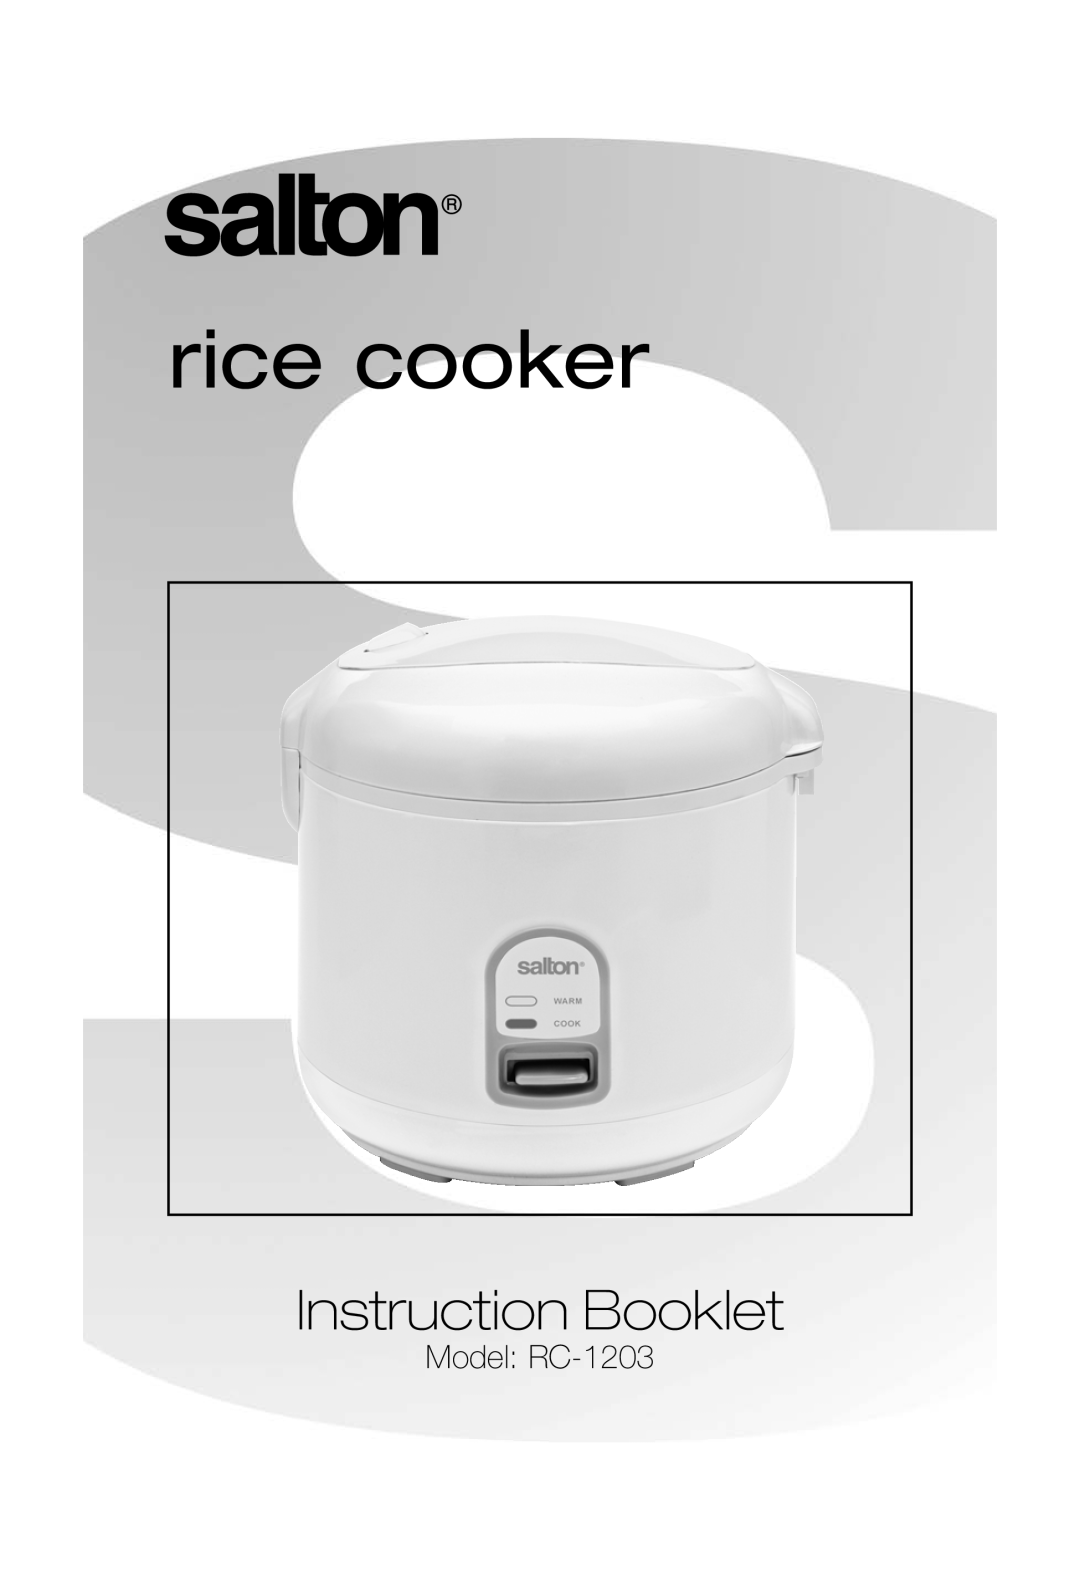 Salton manual Model RC-1203, rice cooker, Instruction Booklet 